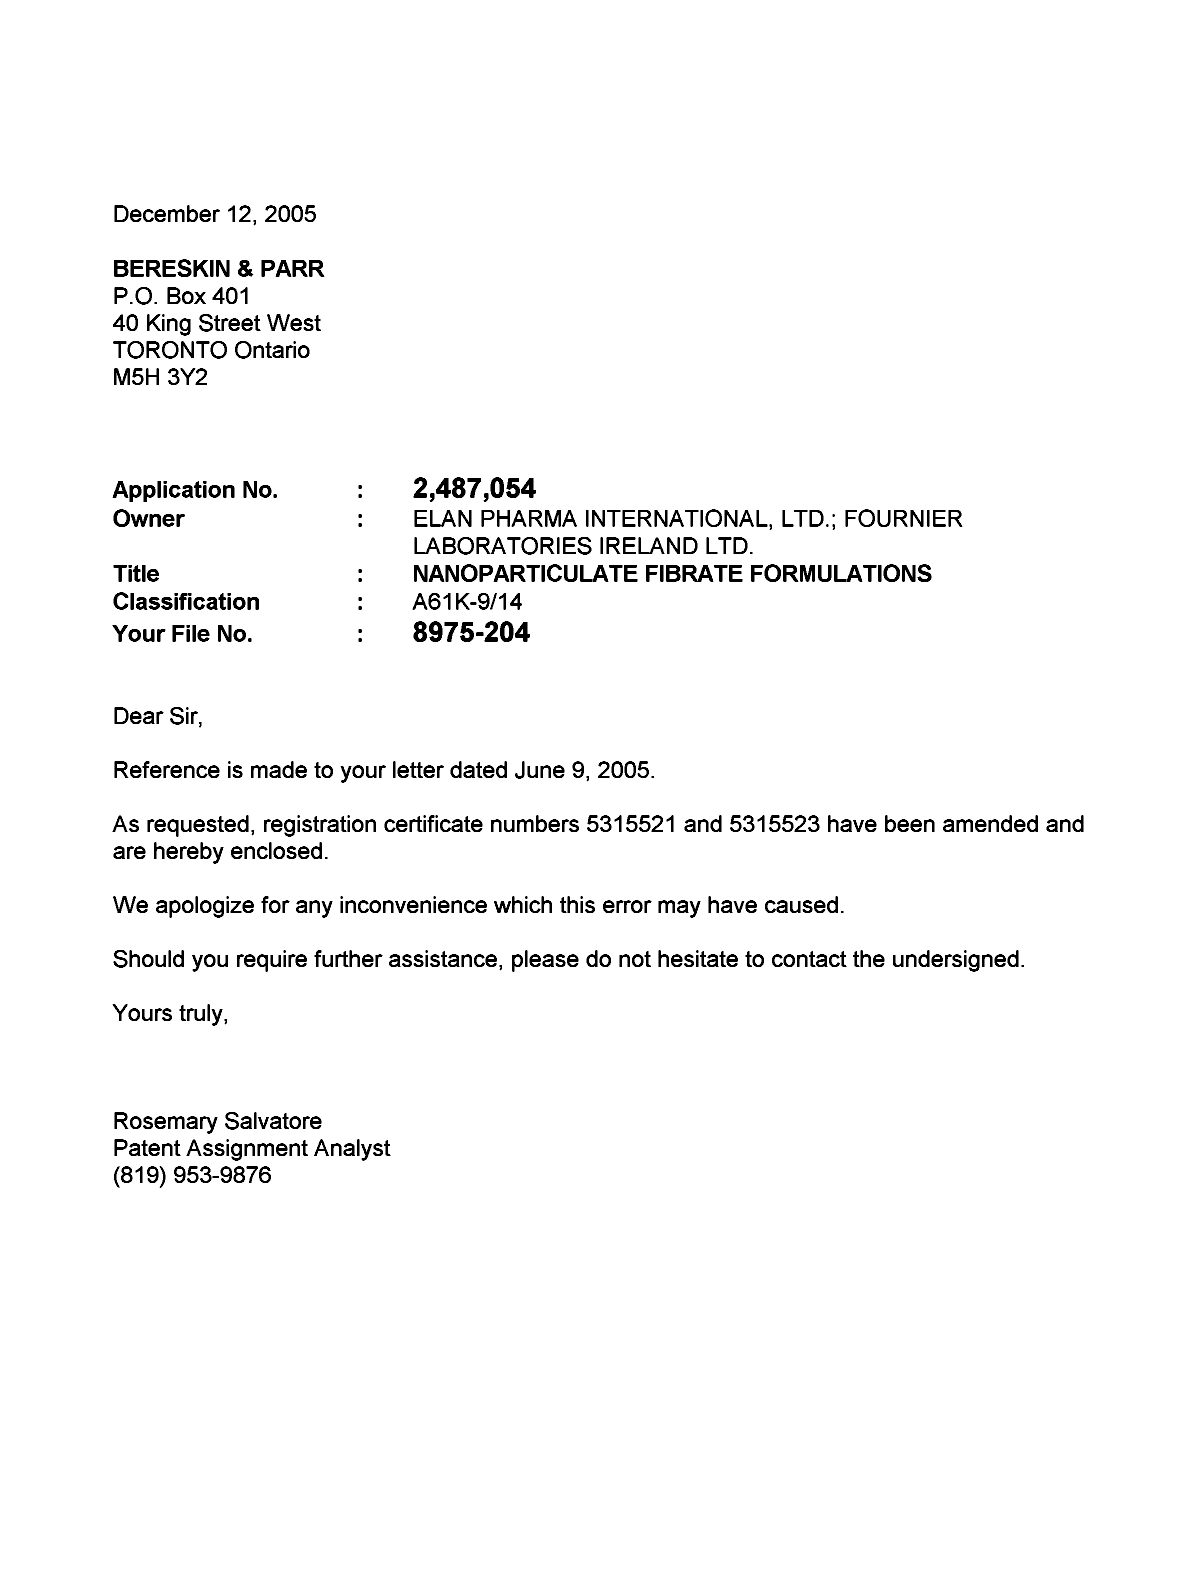 Canadian Patent Document 2487054. Correspondence 20051212. Image 1 of 1